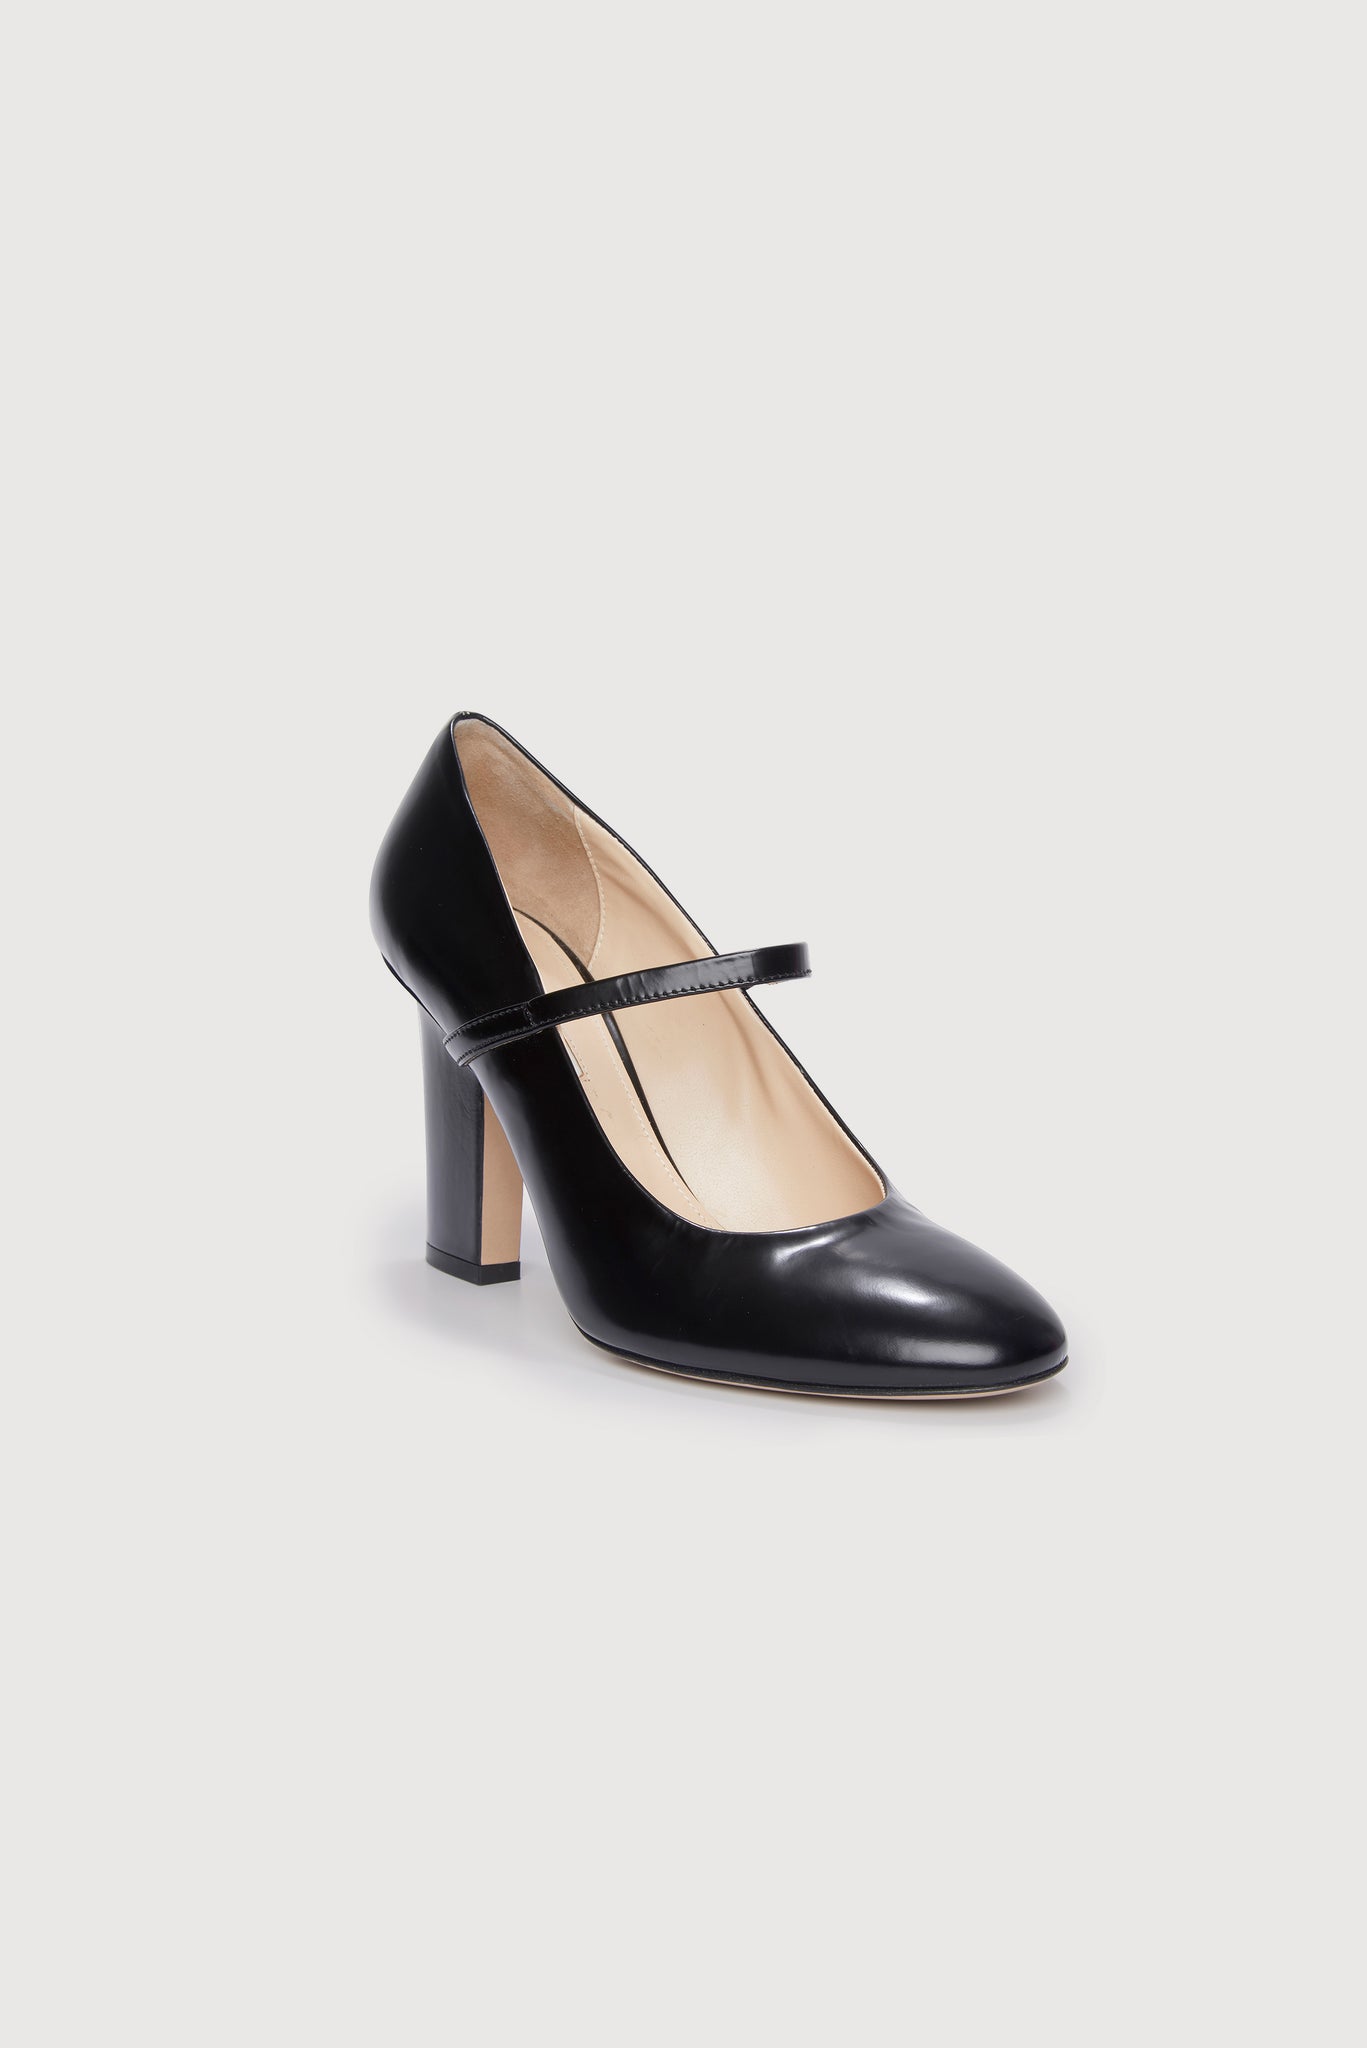 Orelia Black Leather Mary-Jane Shoes | Emilia Wickstead